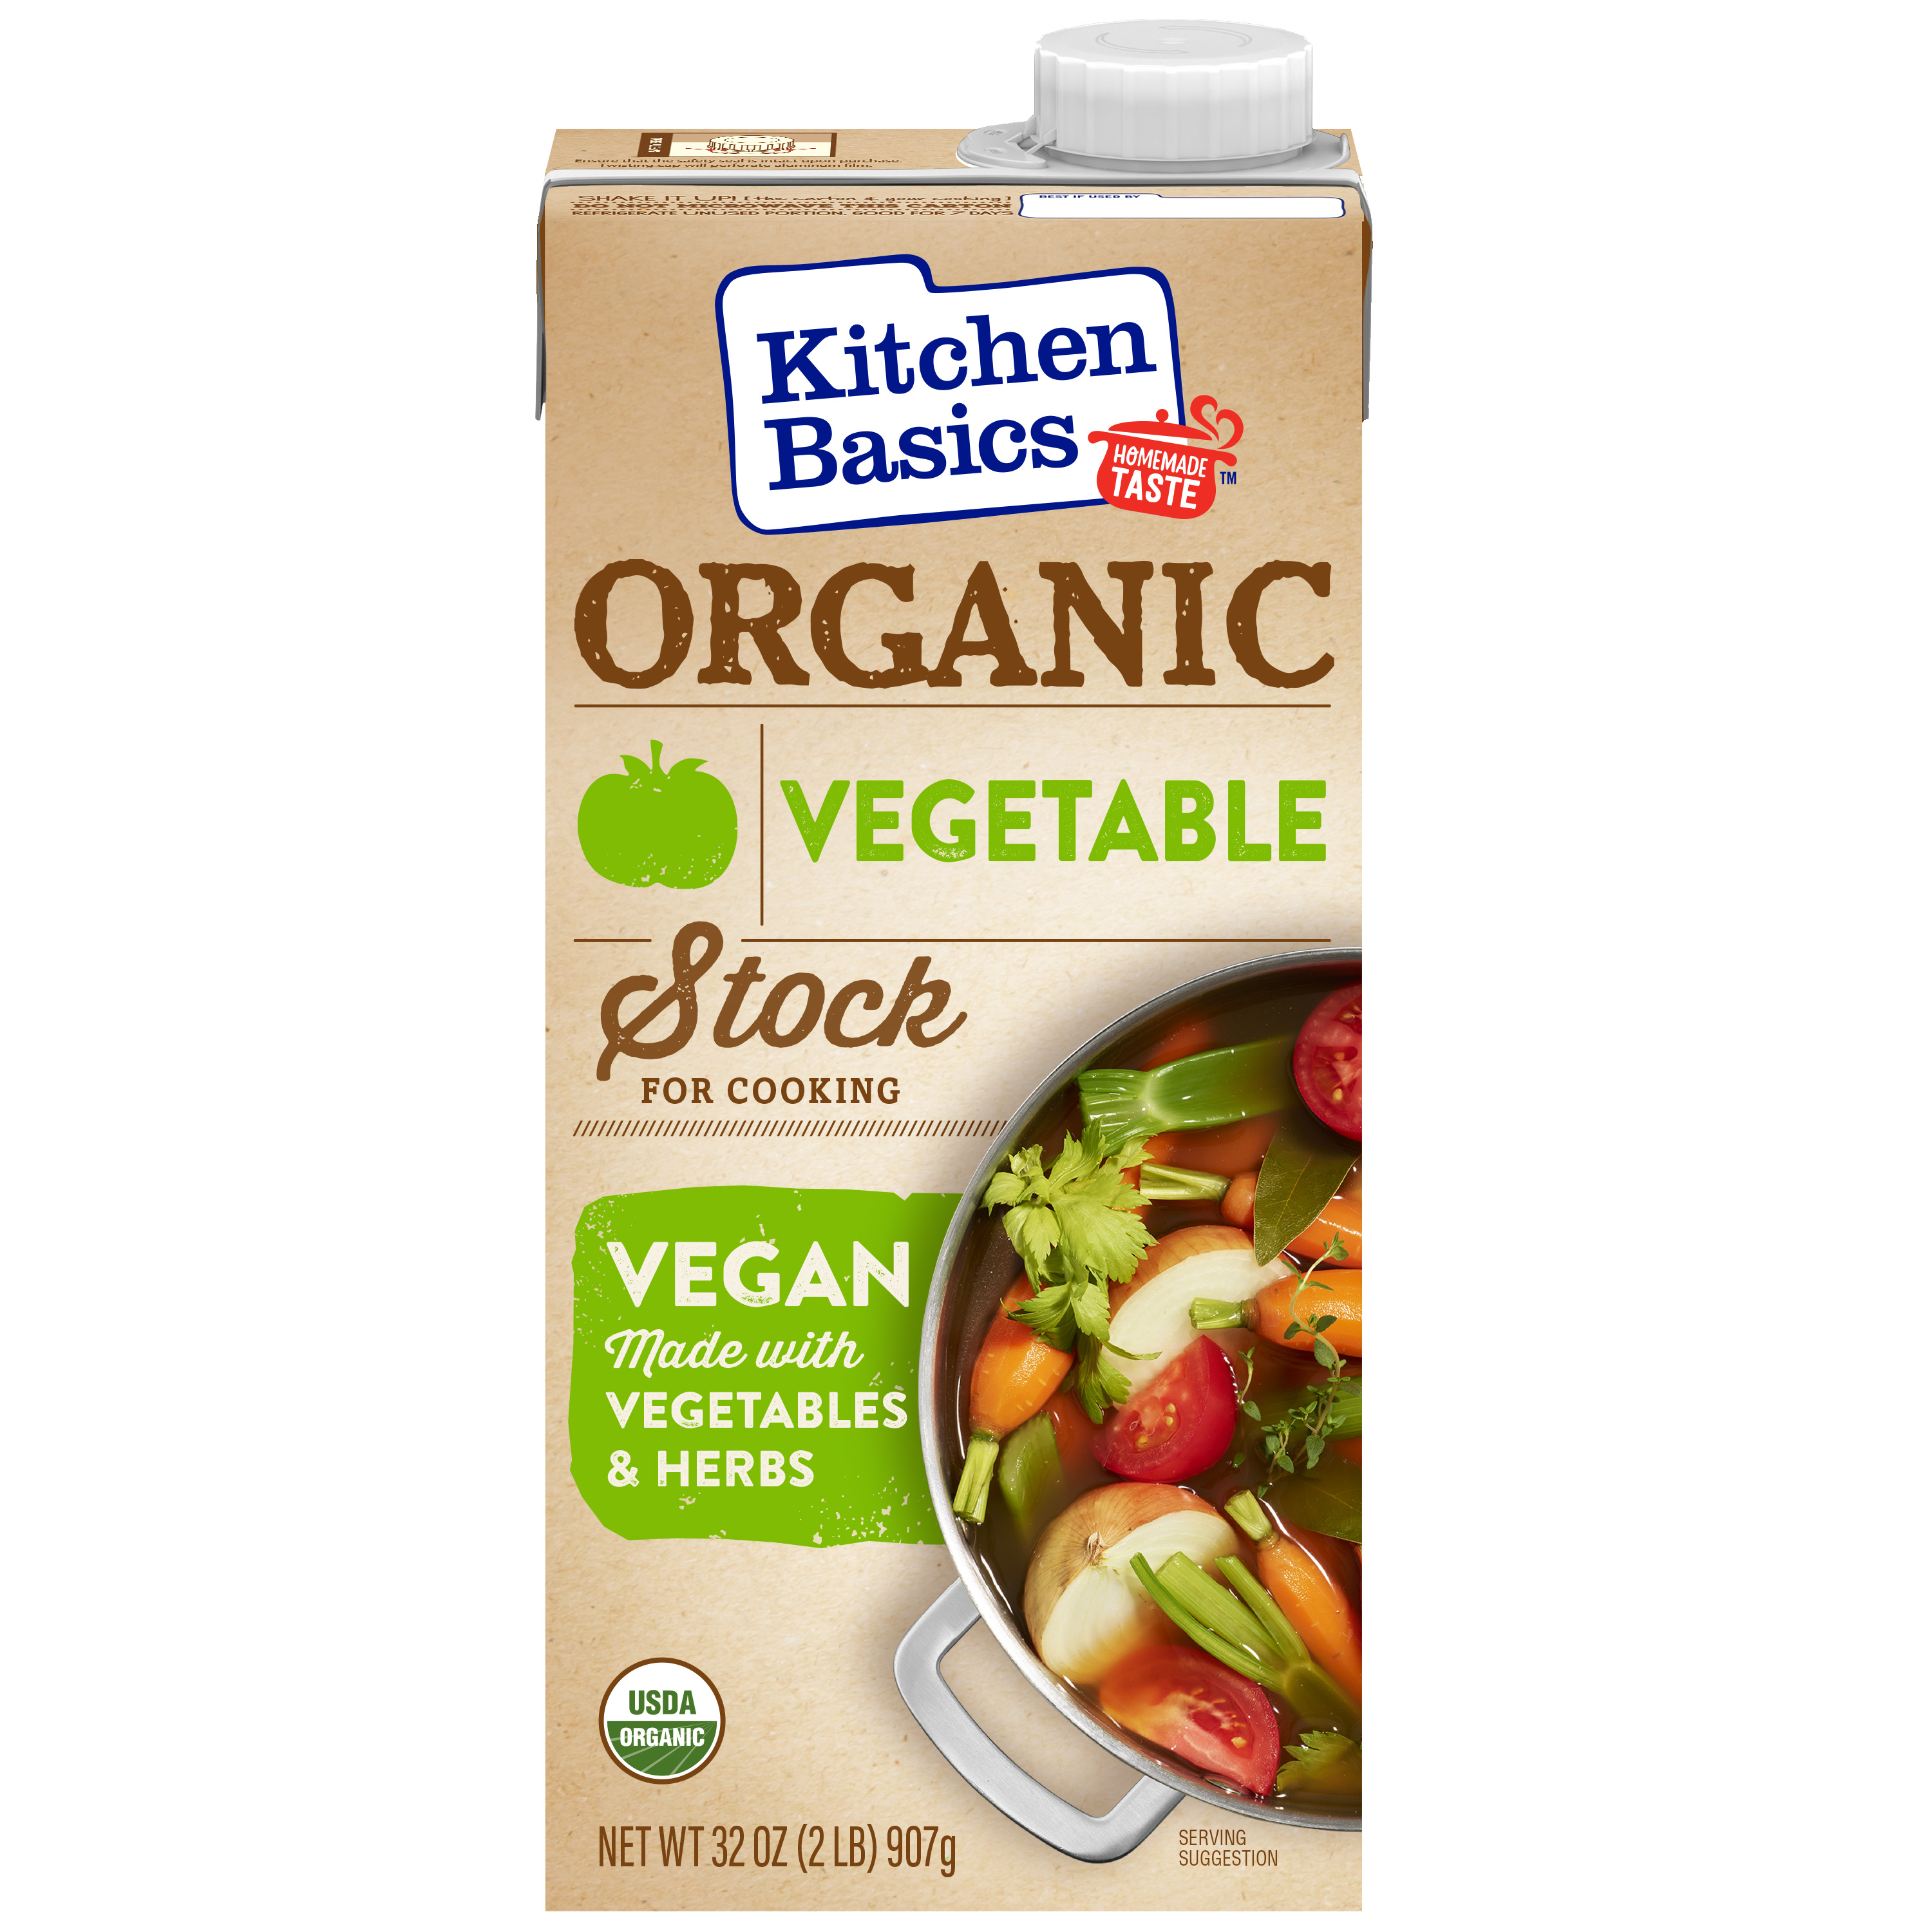 Kitchen Basics Organic Vegetable Stock, 32 oz Carton, front